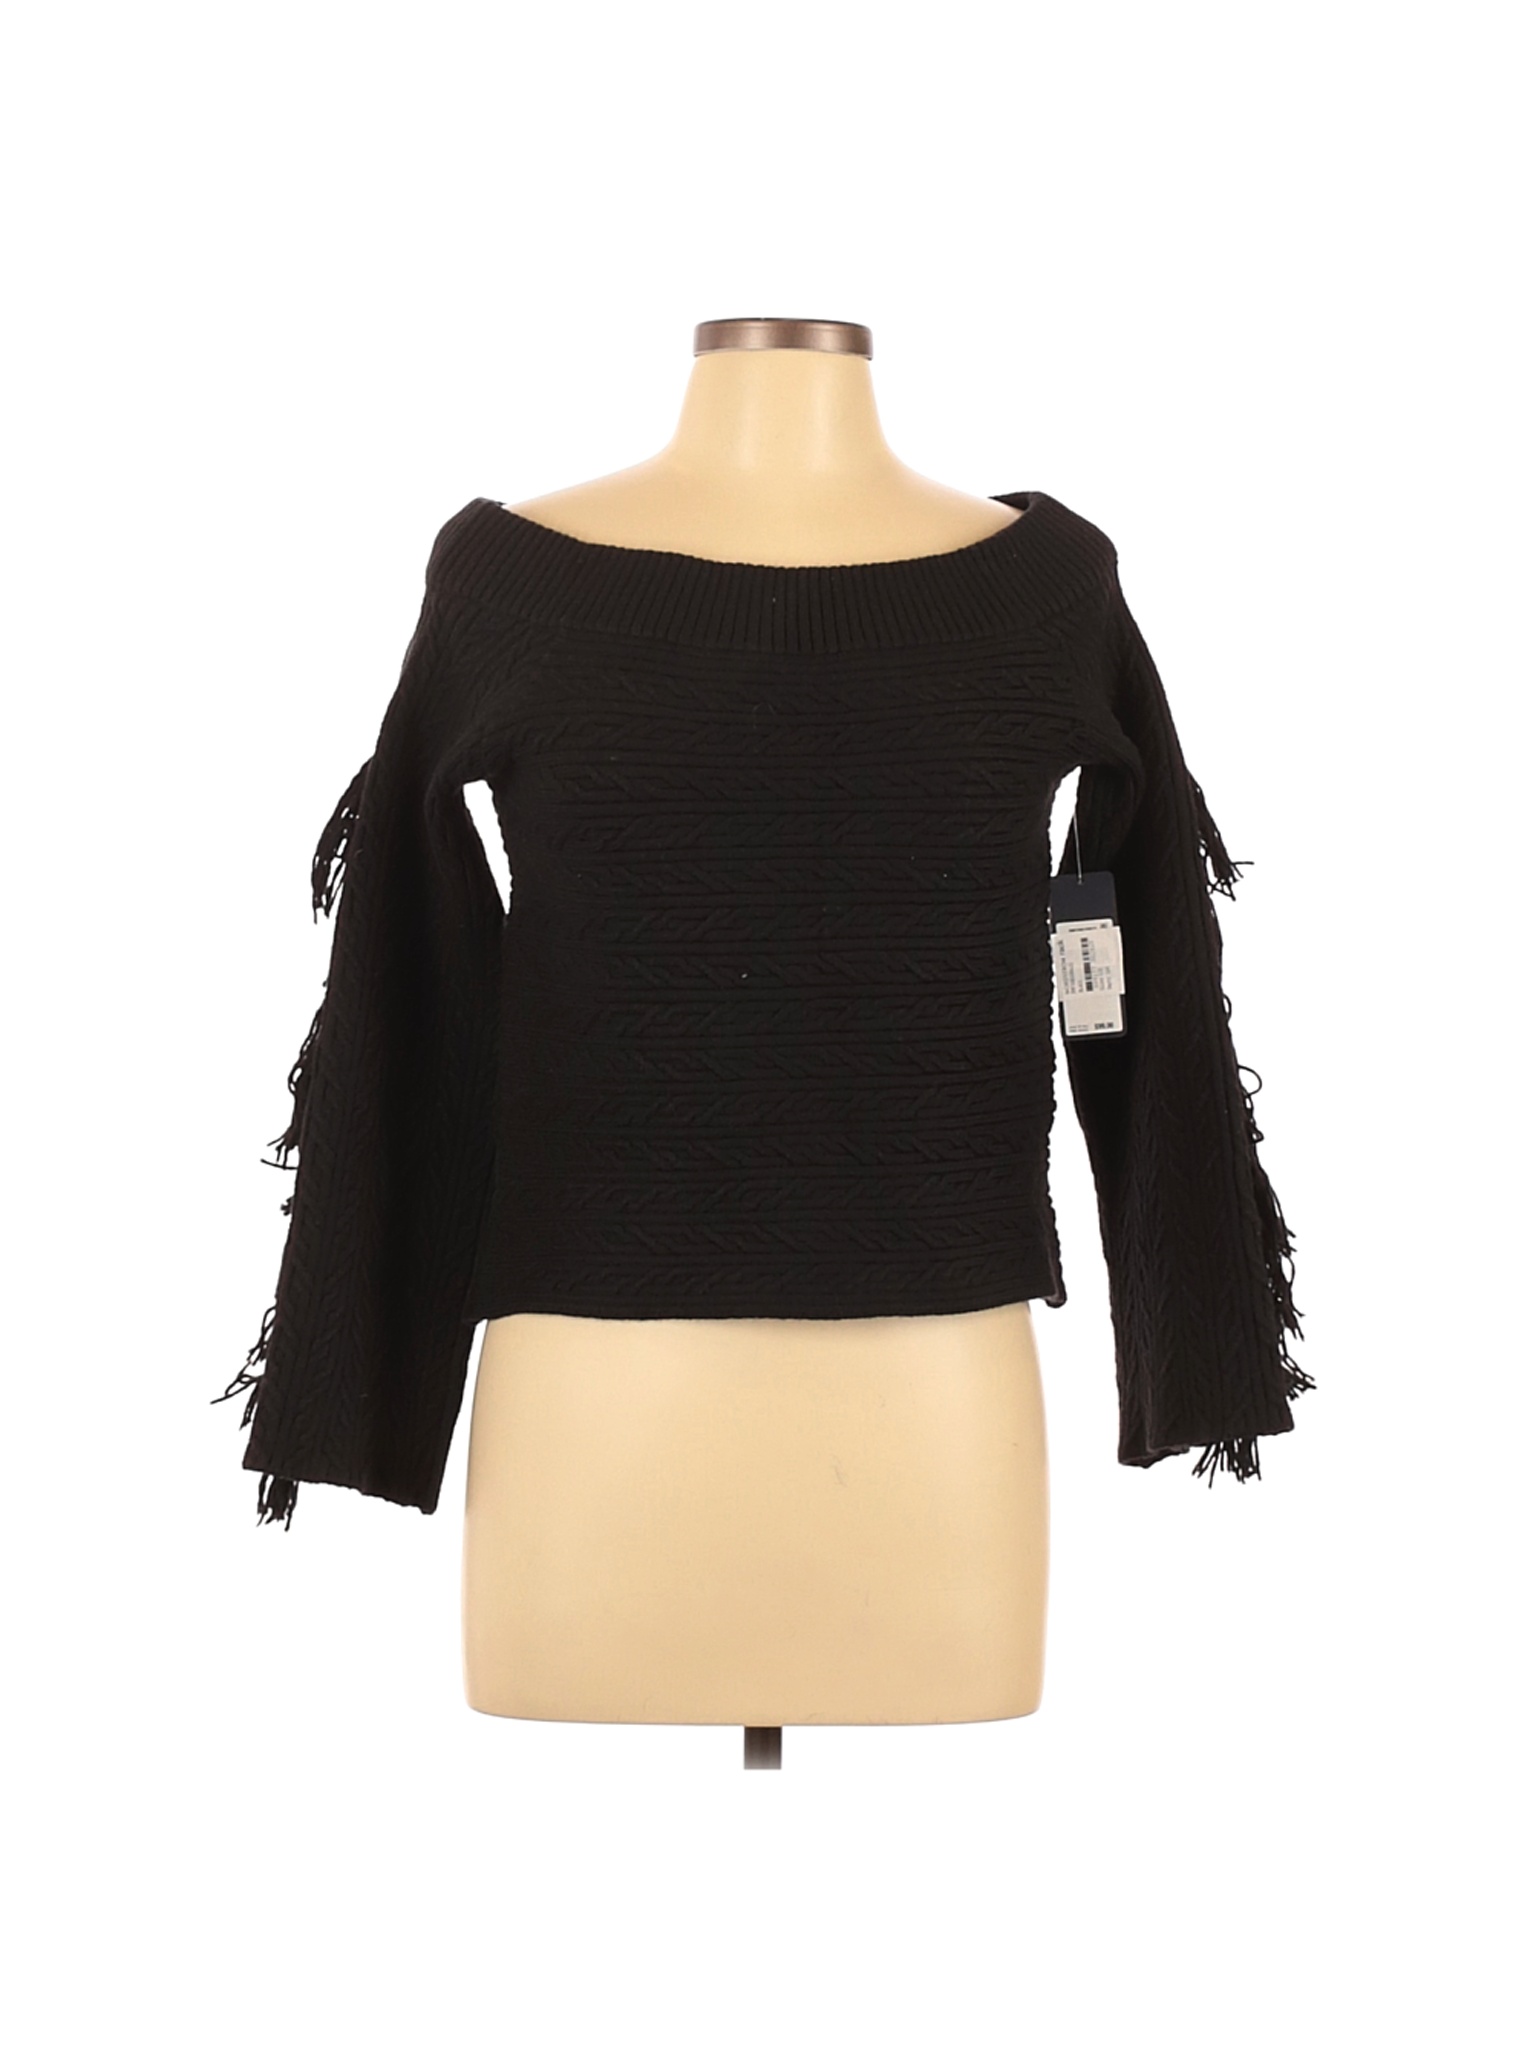 NWT RACHEL Rachel Roy Women Black Pullover Sweater L | eBay